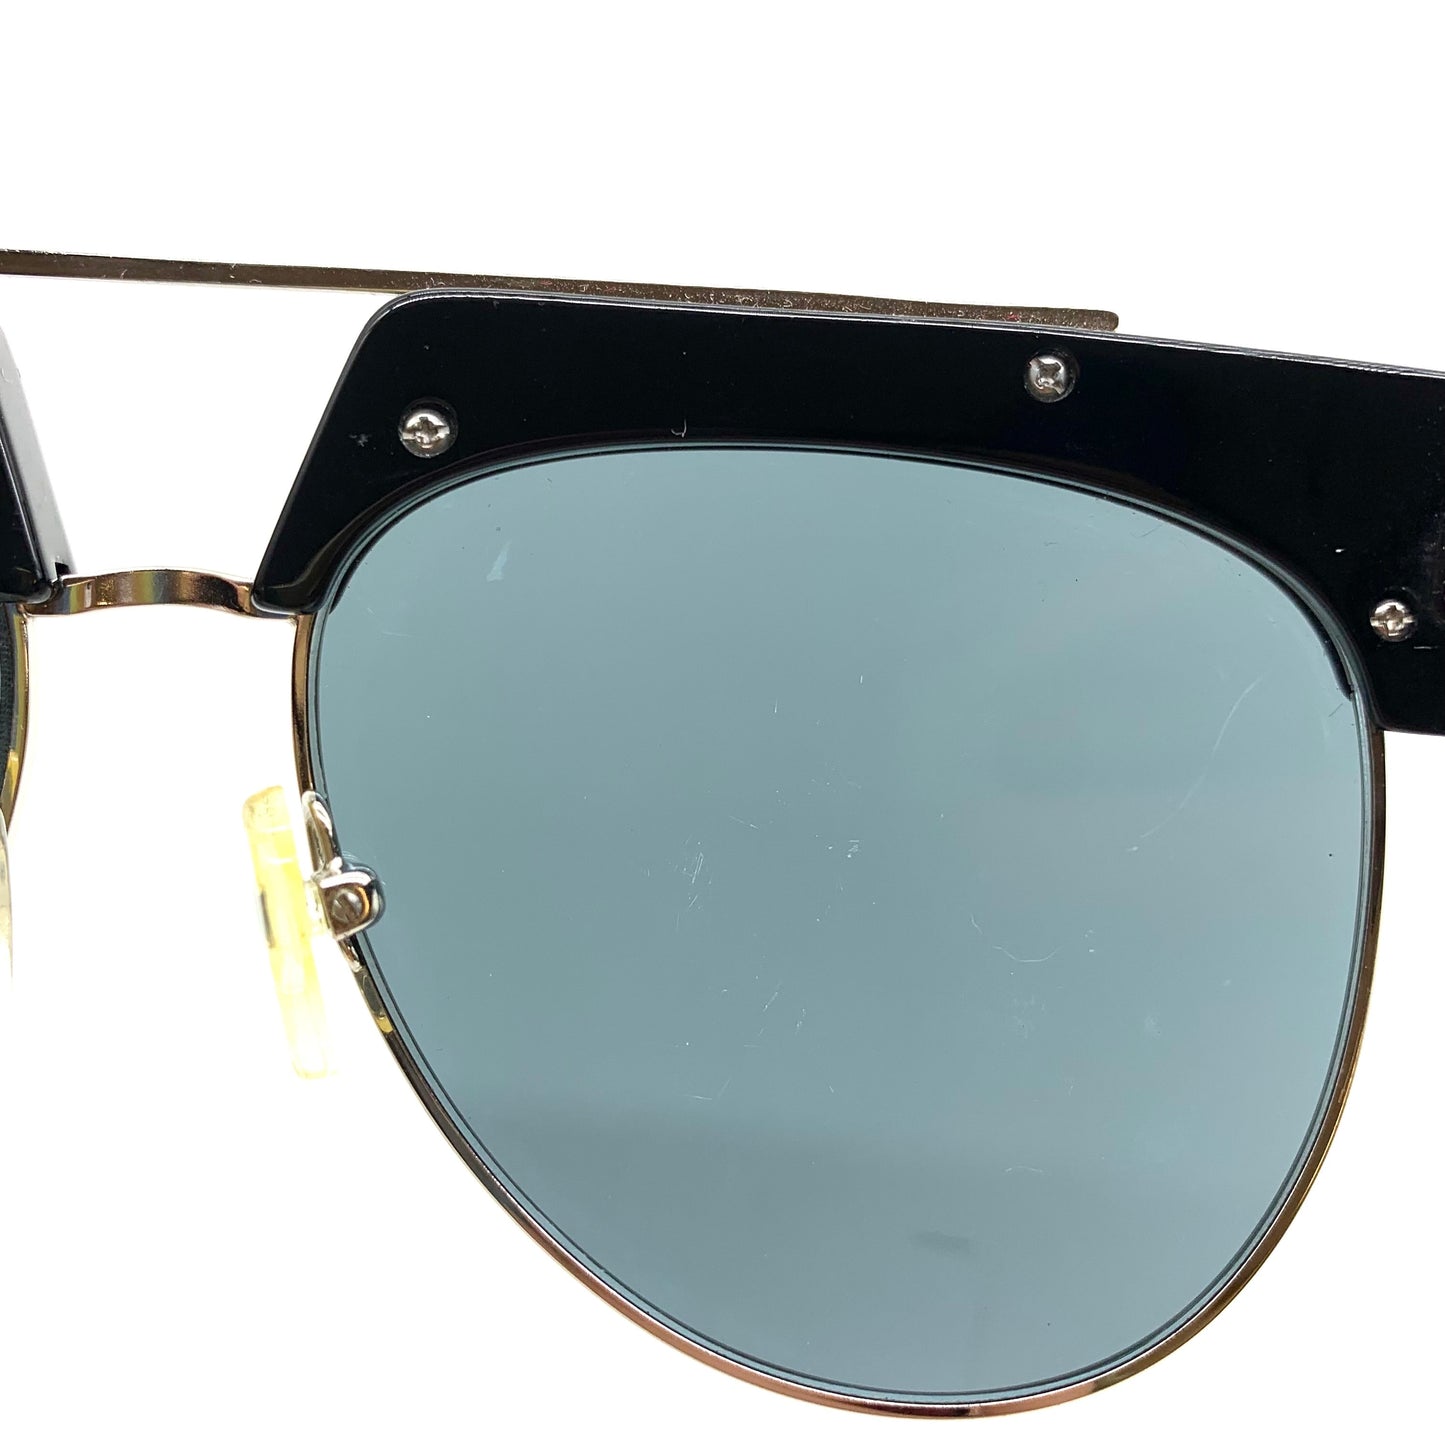 Black Sunglasses Designer Michael Kors